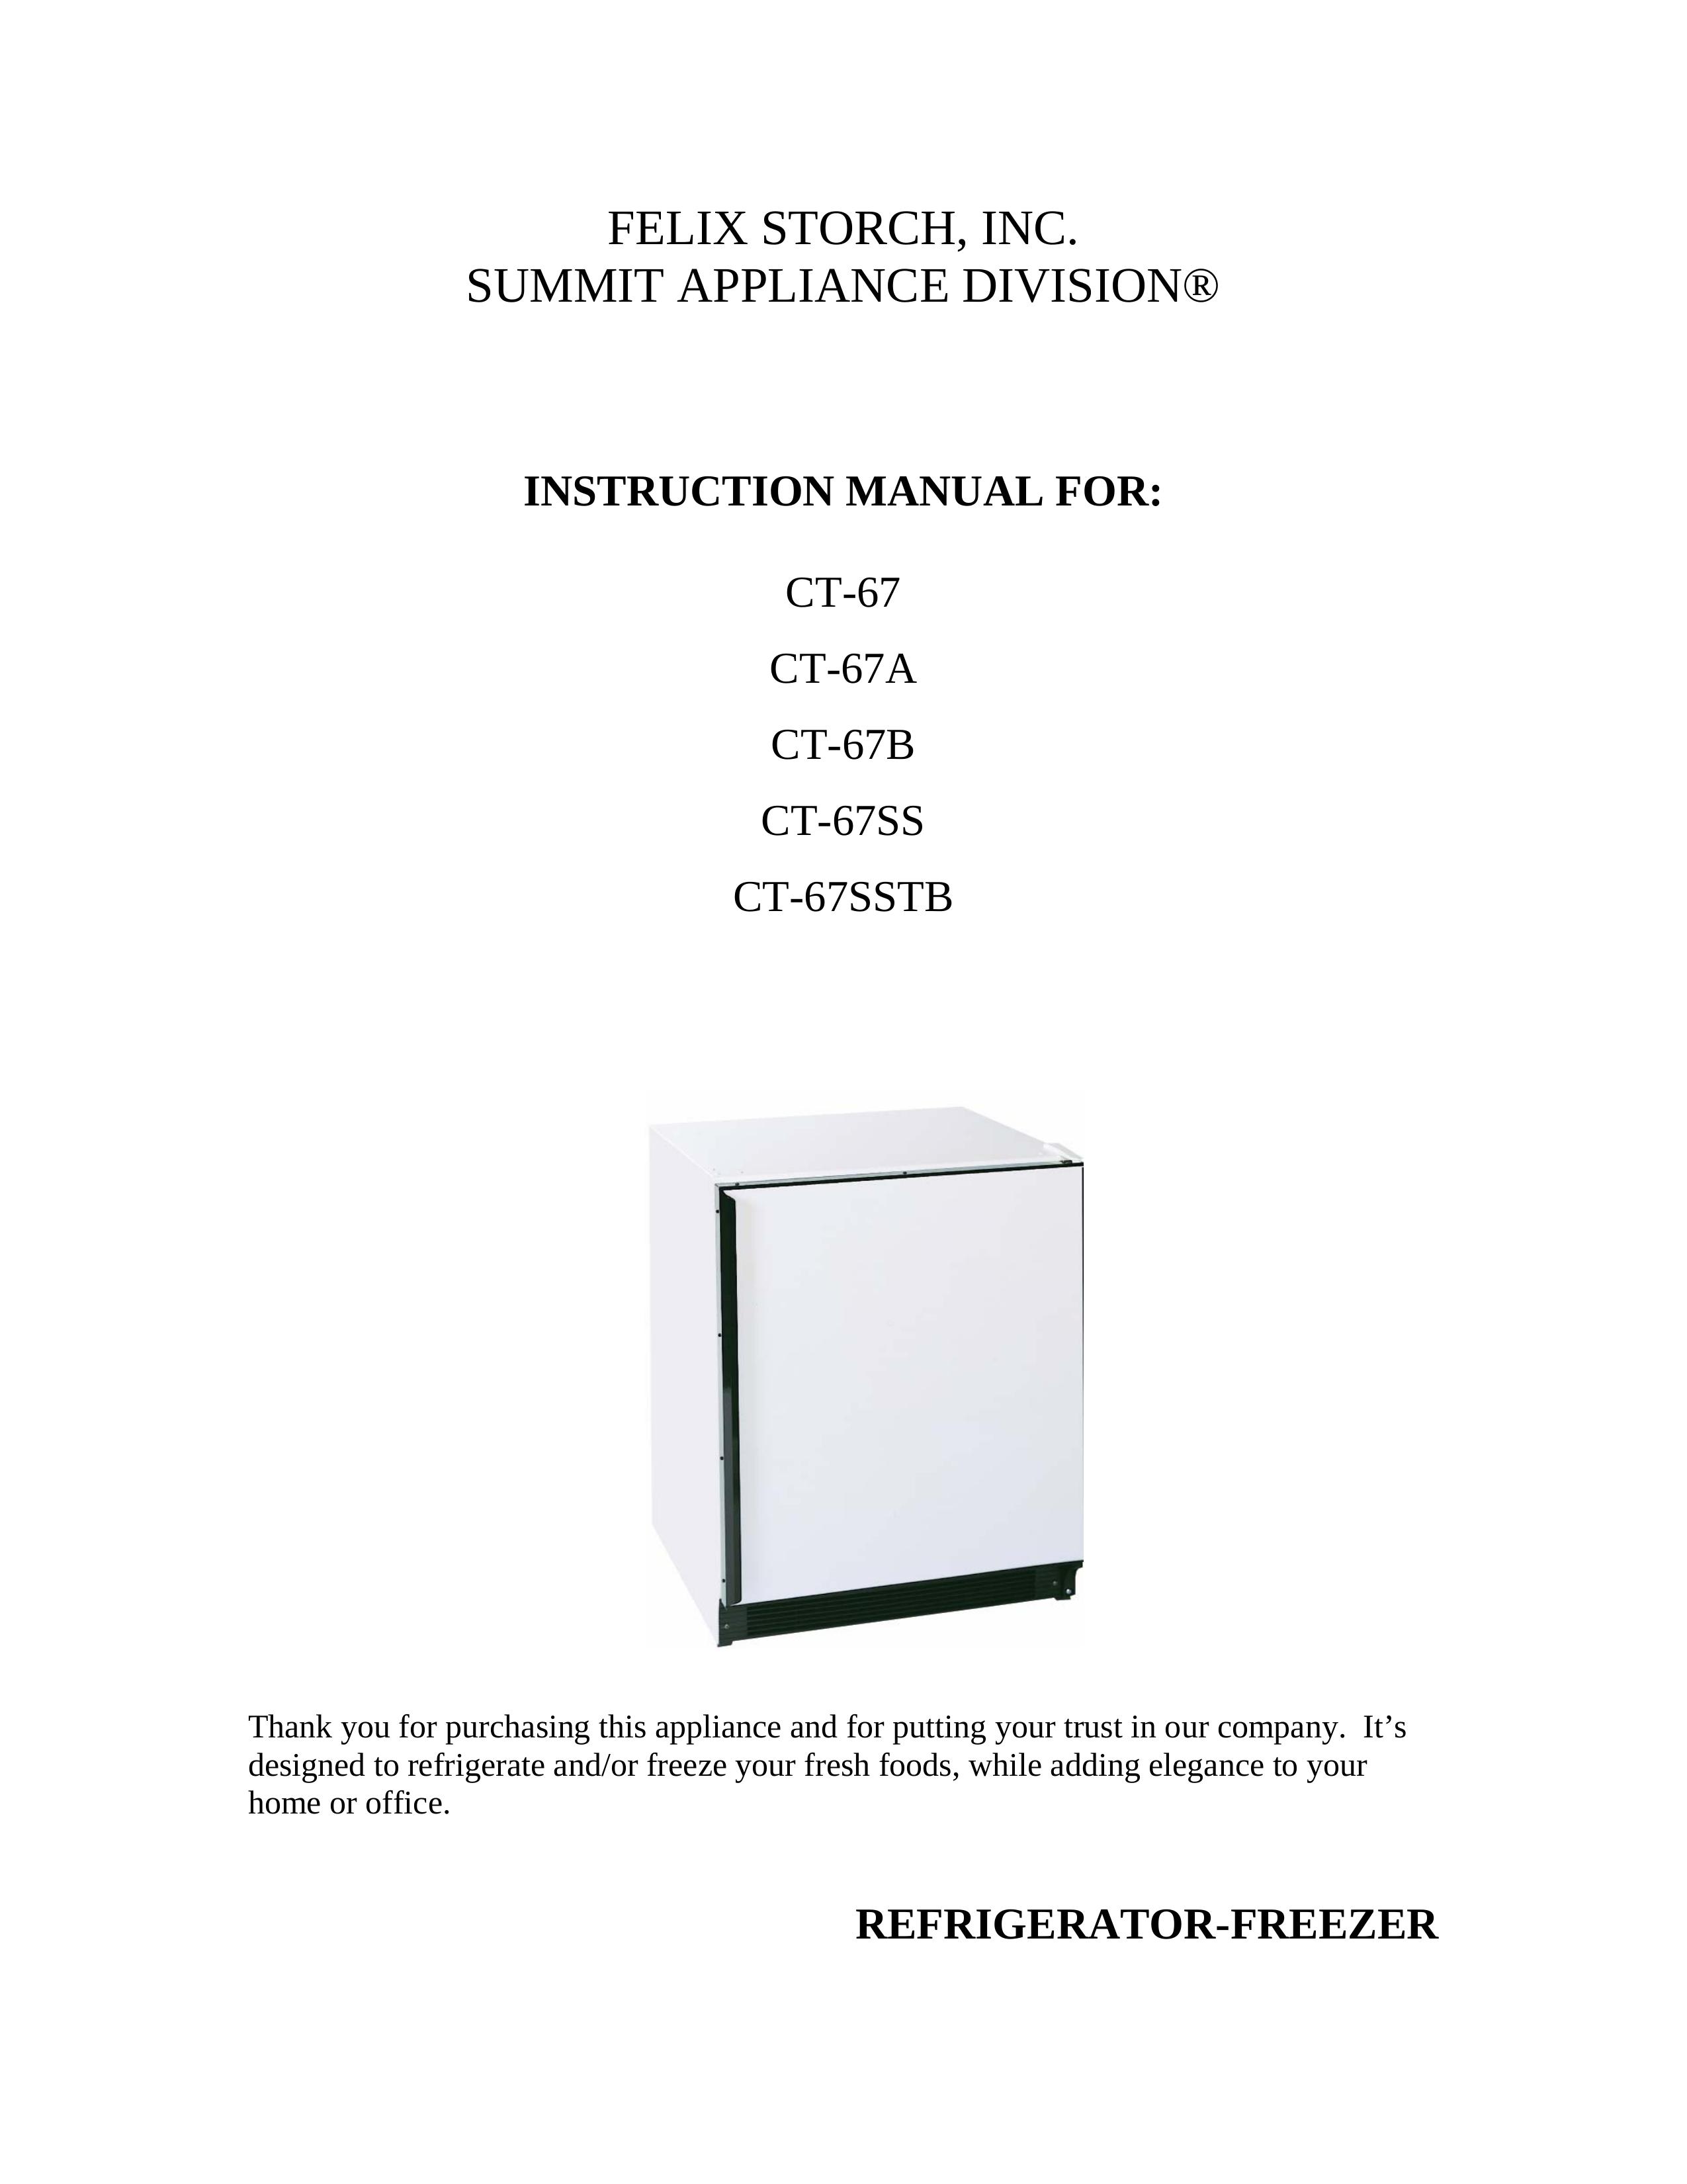 Summit CT-67 Refrigerator User Manual